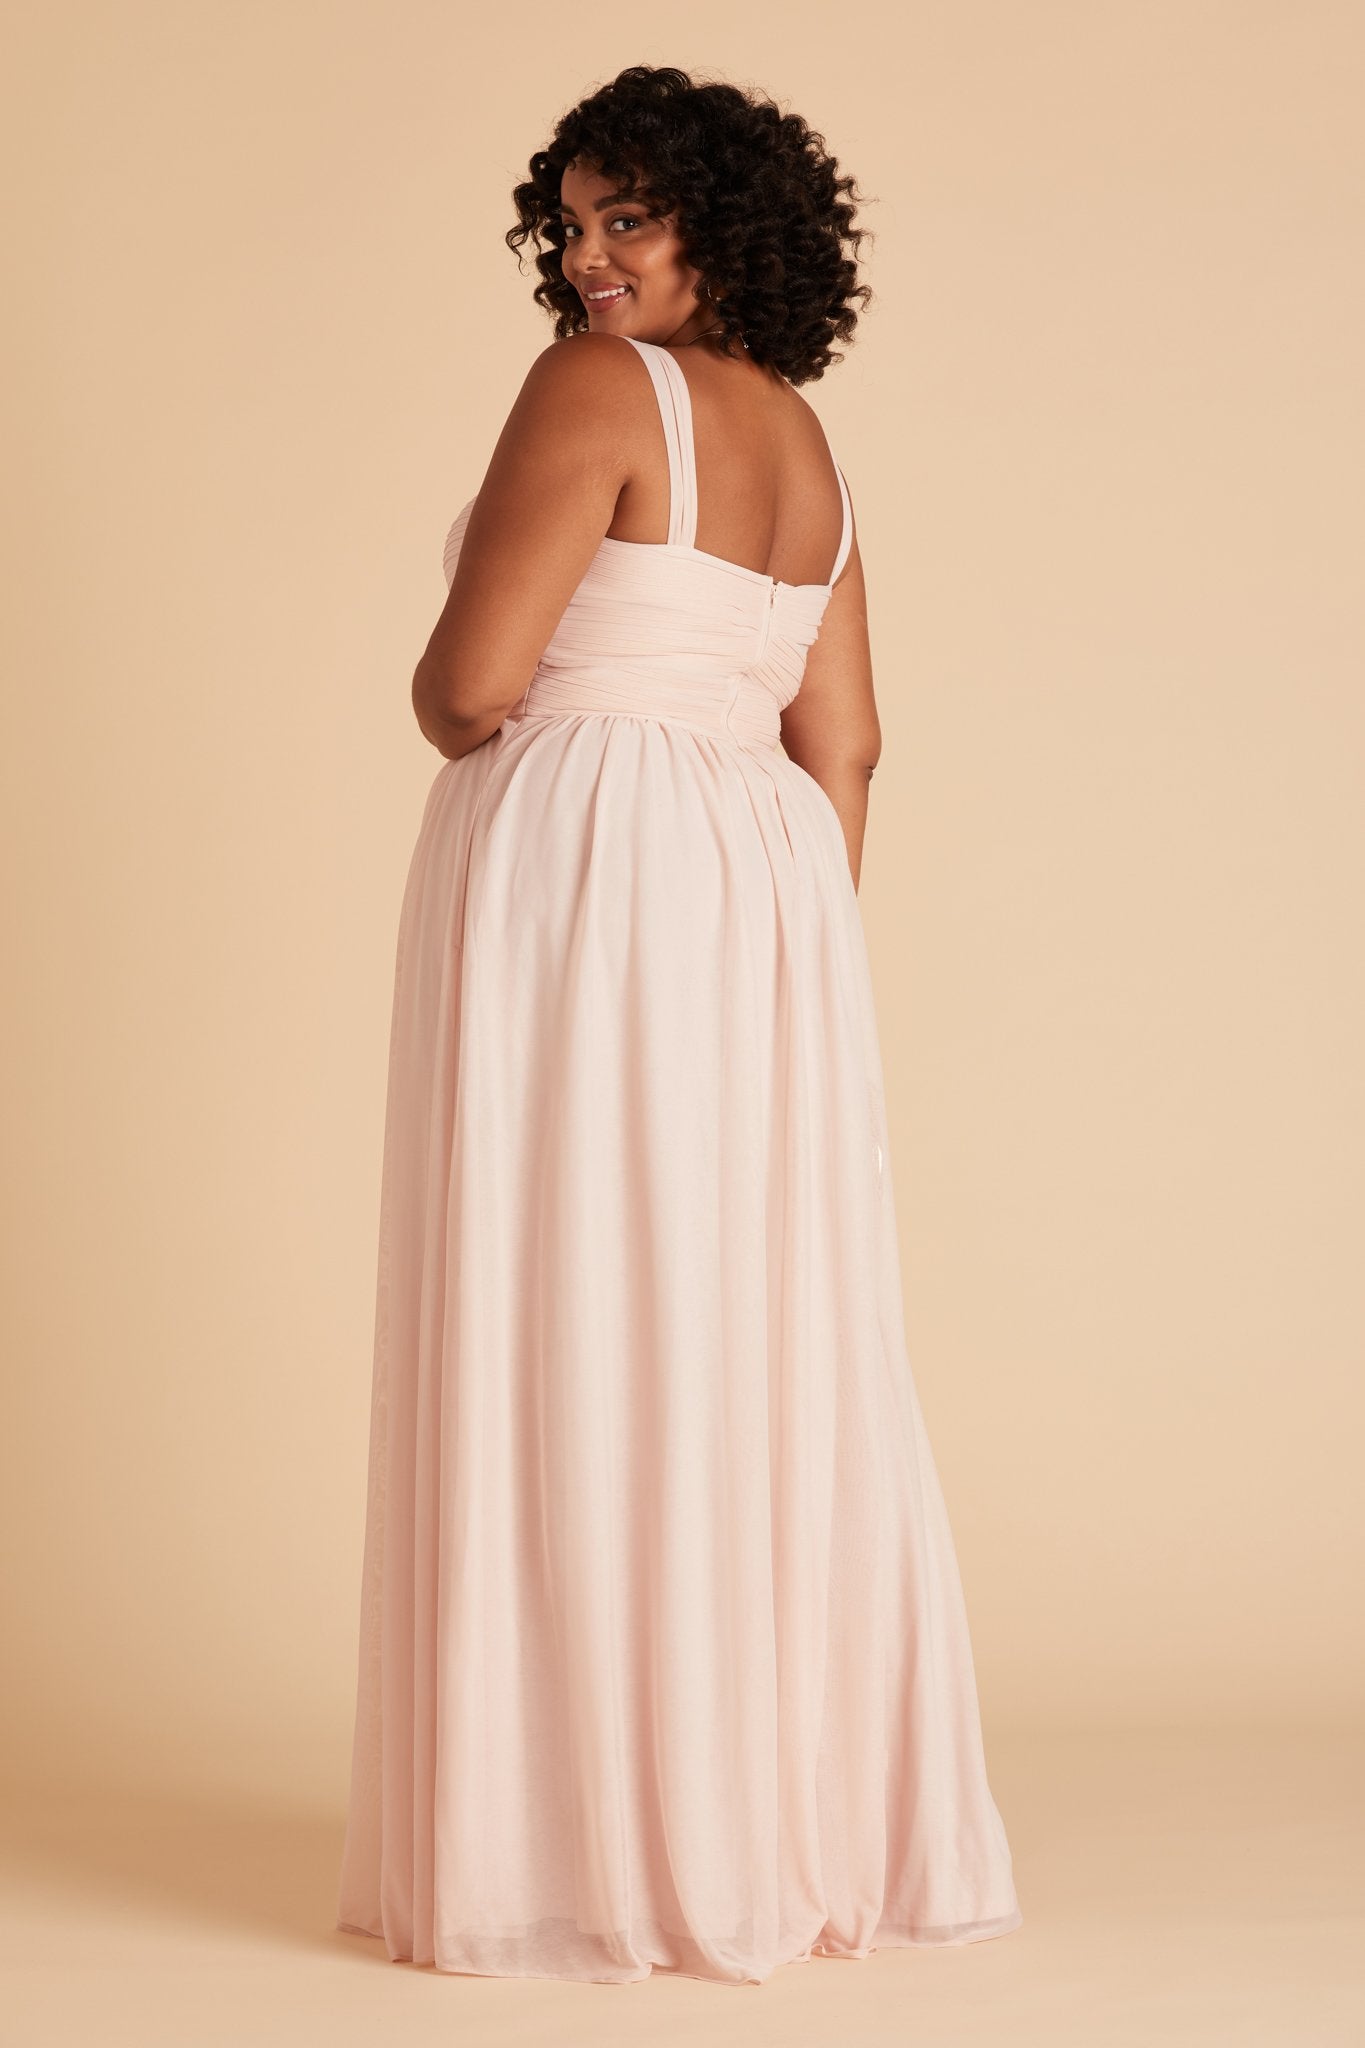 Elsye plus size bridesmaid dress in pale blush chiffon by Birdy Grey, back view